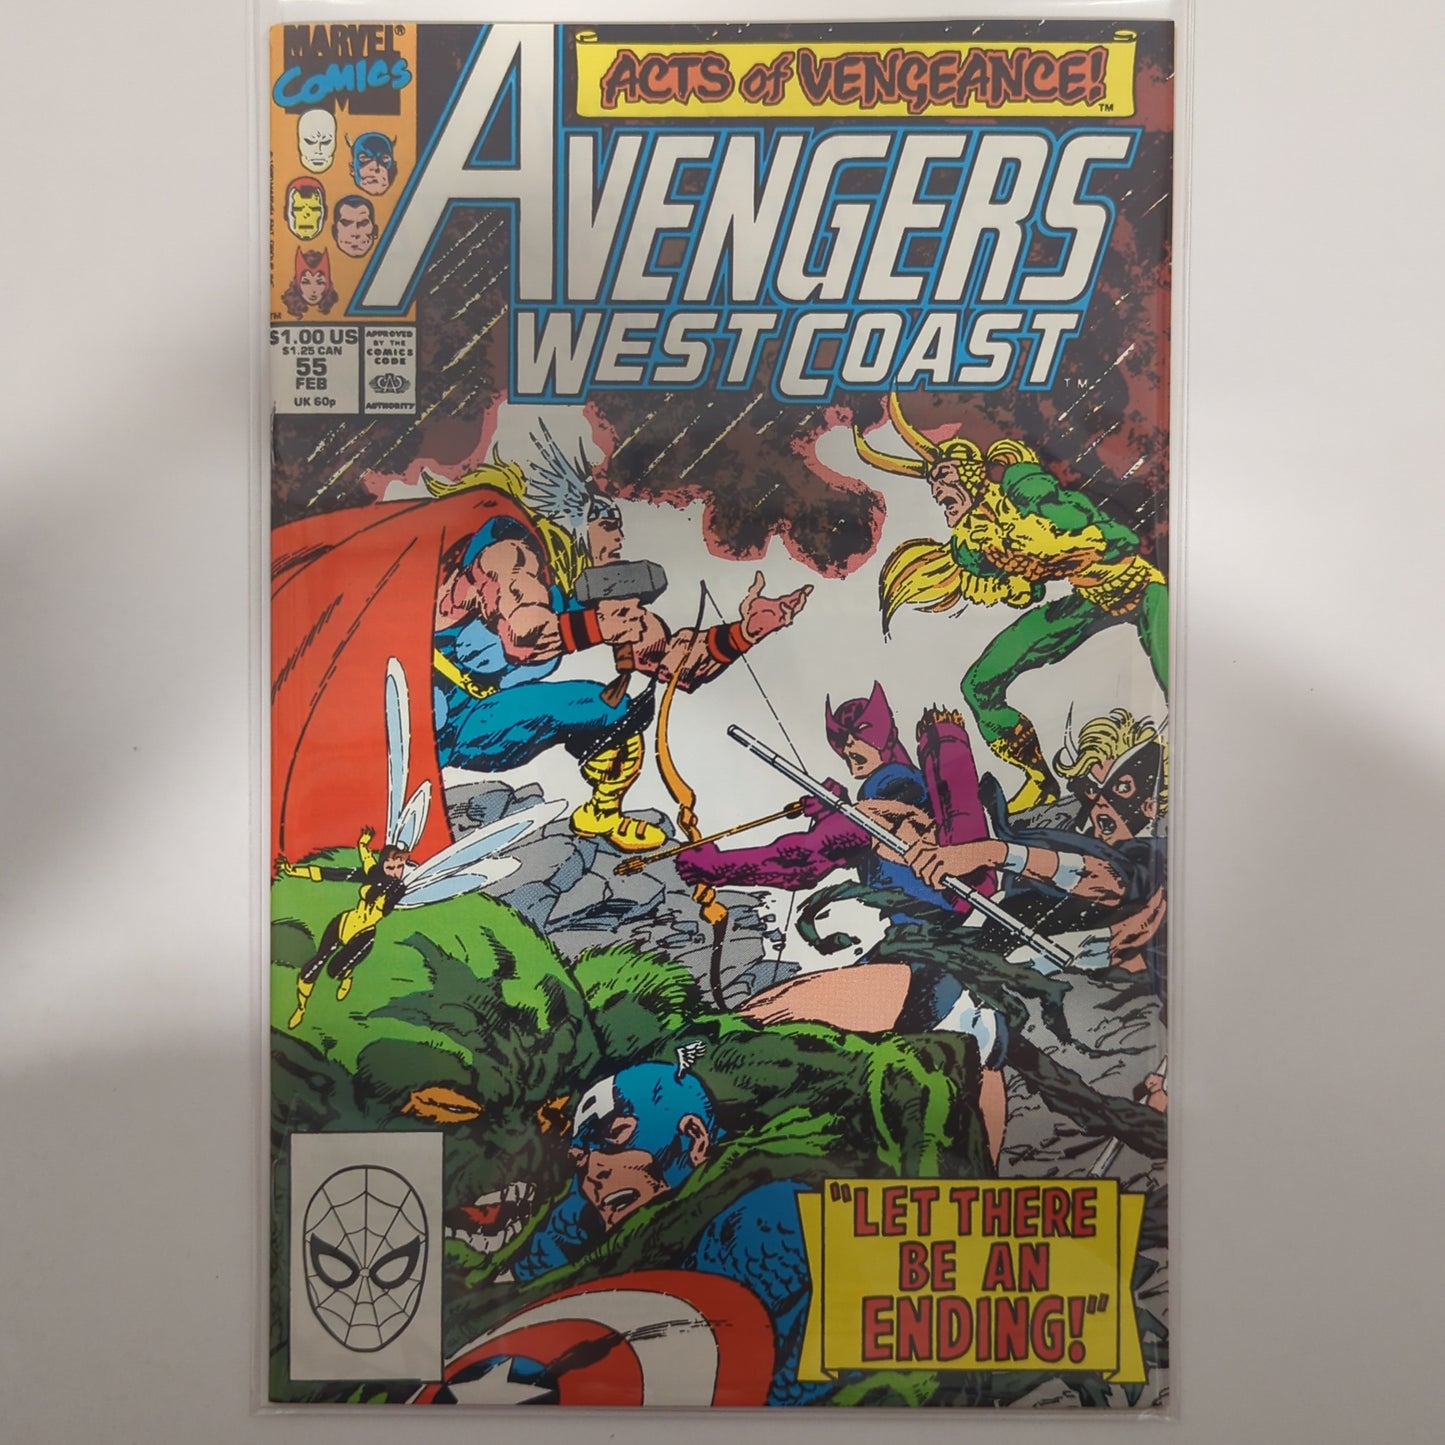 The West Coast Avengers #55